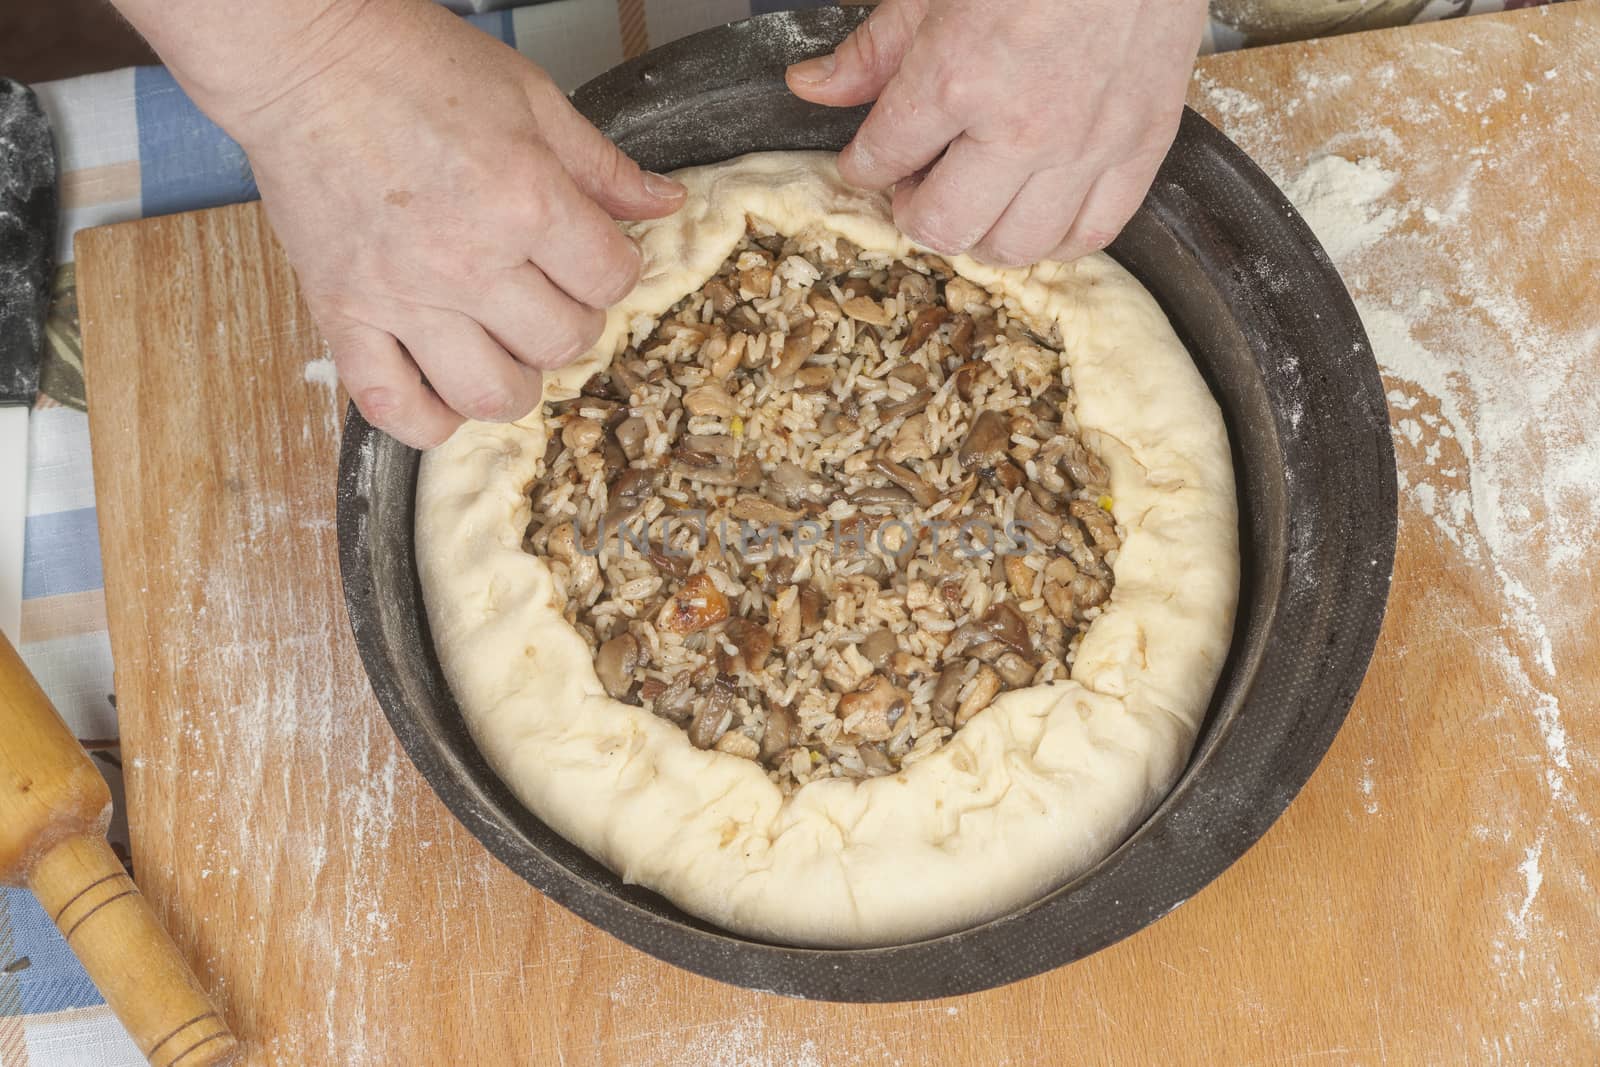 Putting filling on raw dough  by kozak